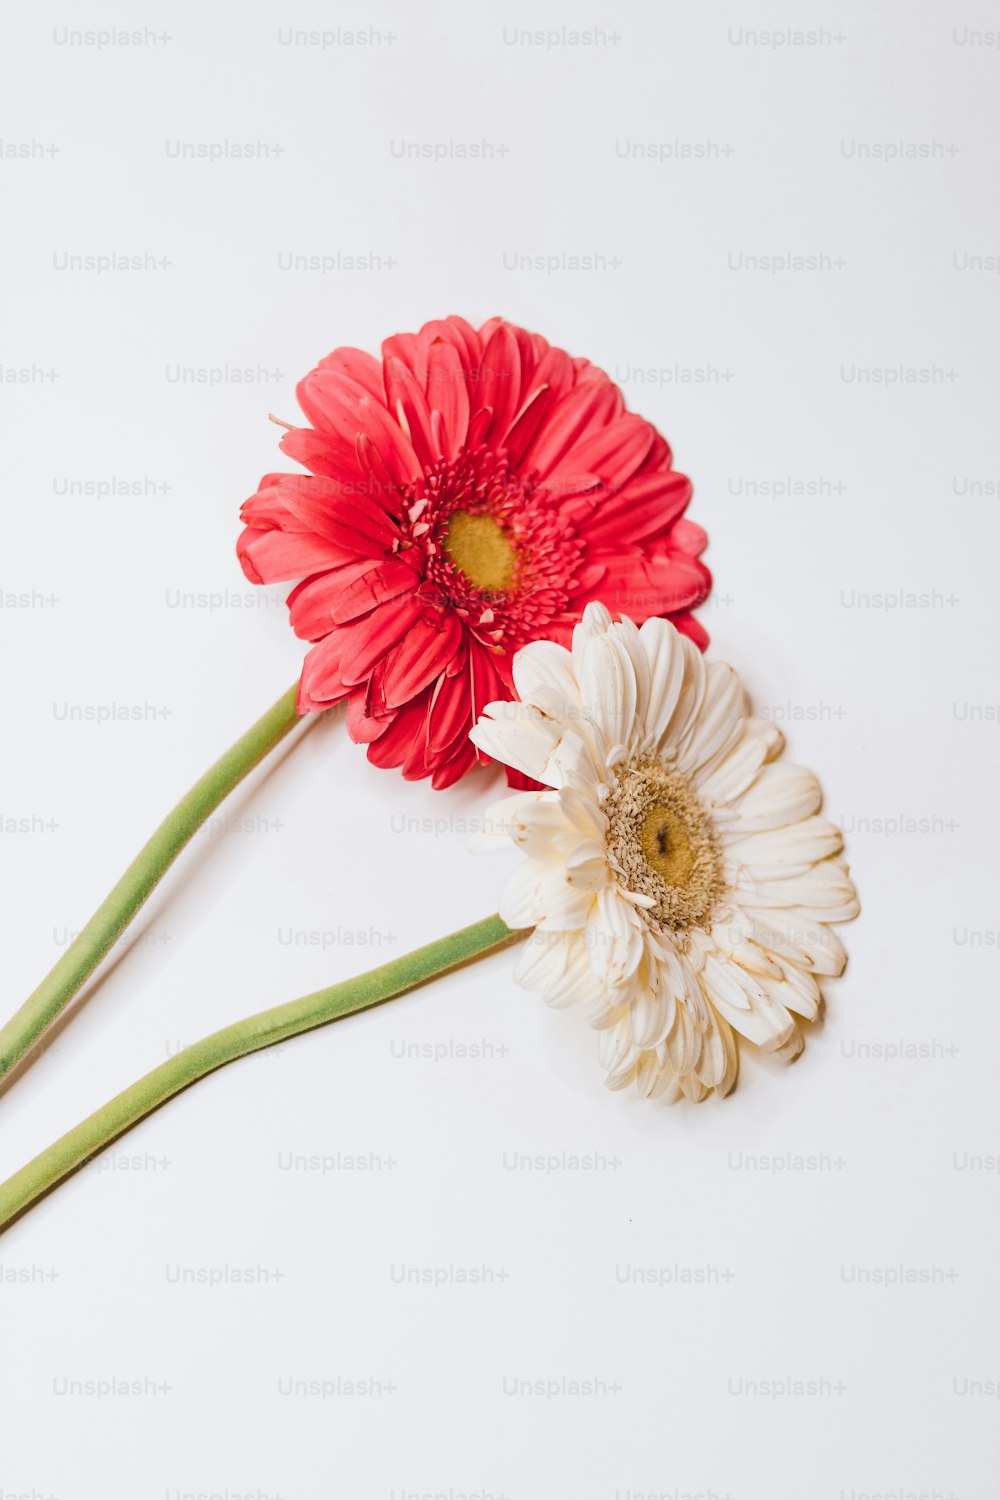 Flower Light Pictures  Download Free Images on Unsplash